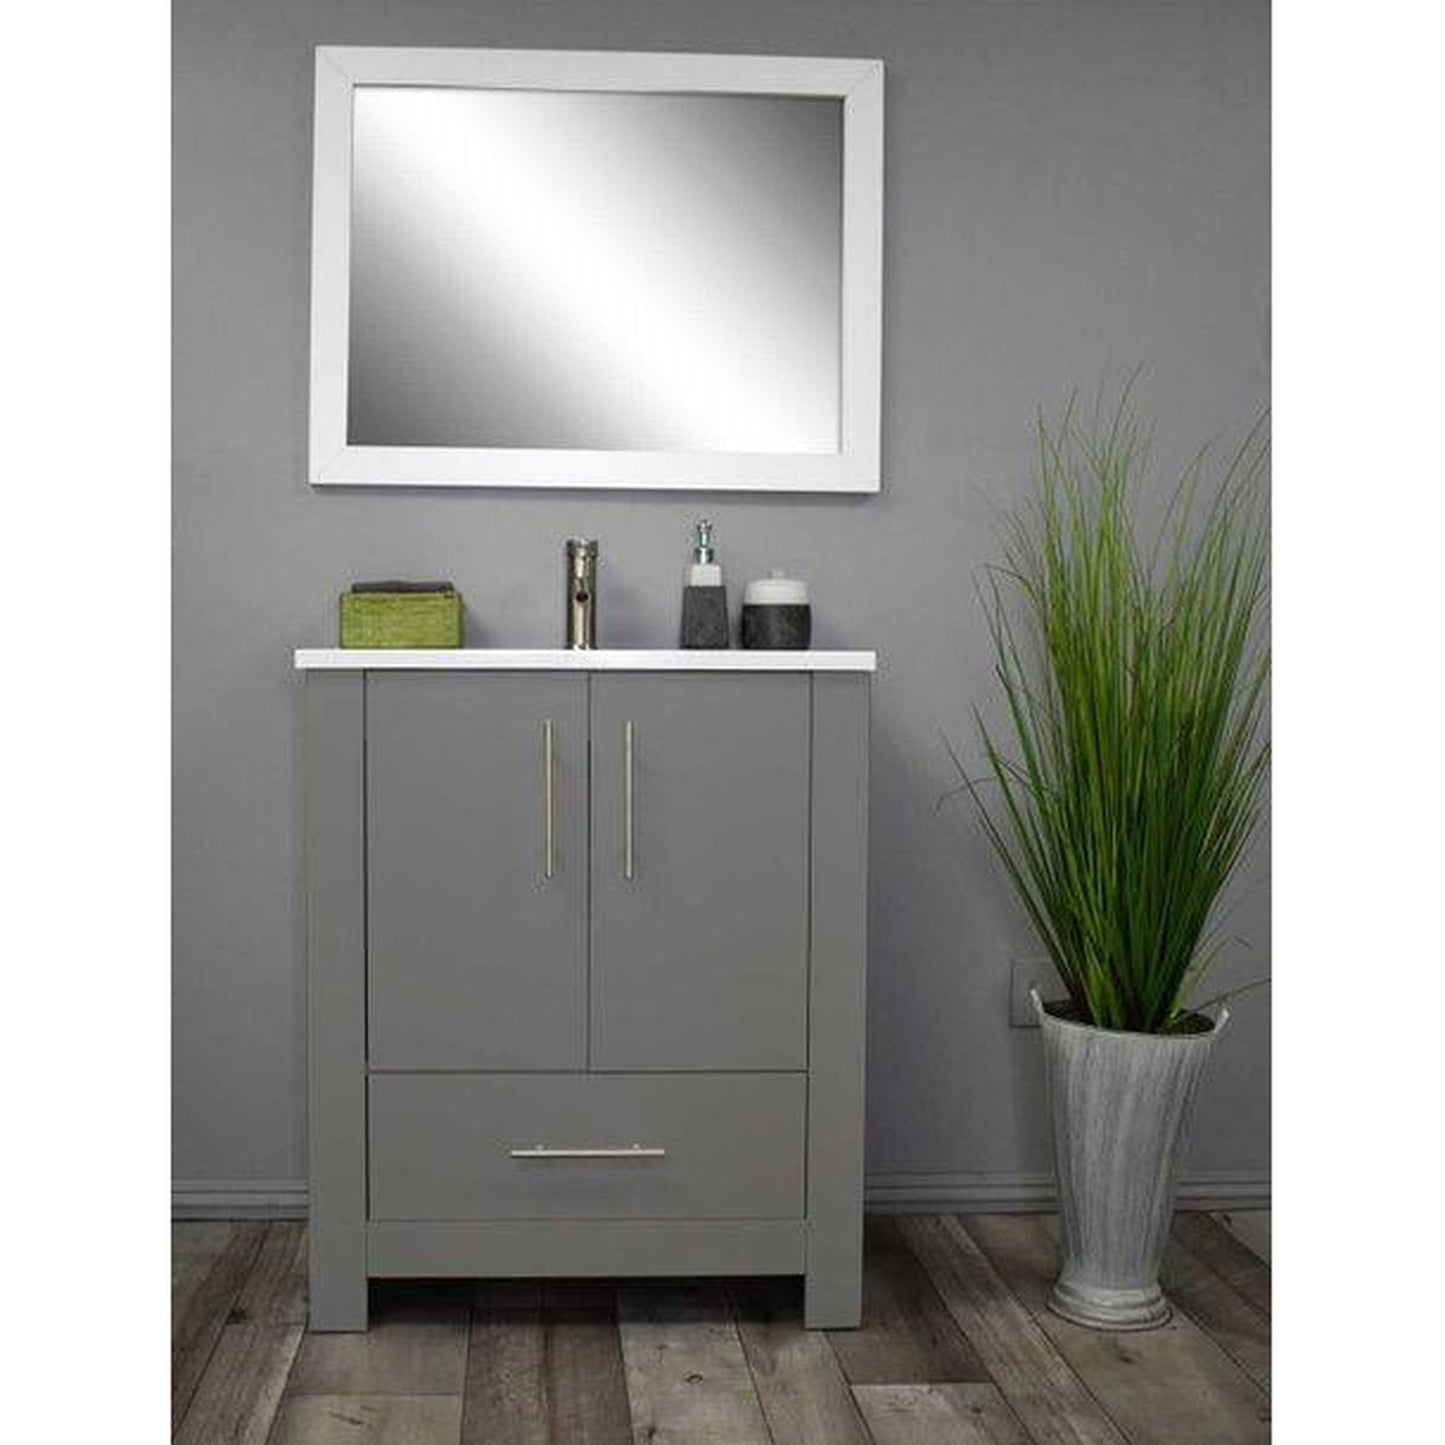 Volpa USA Boston 24" x 20" Gray Modern Freestanding Bathroom Vanity With Acrylic Top, Integrated Acrylic Sink And Brushed Nickel Handles